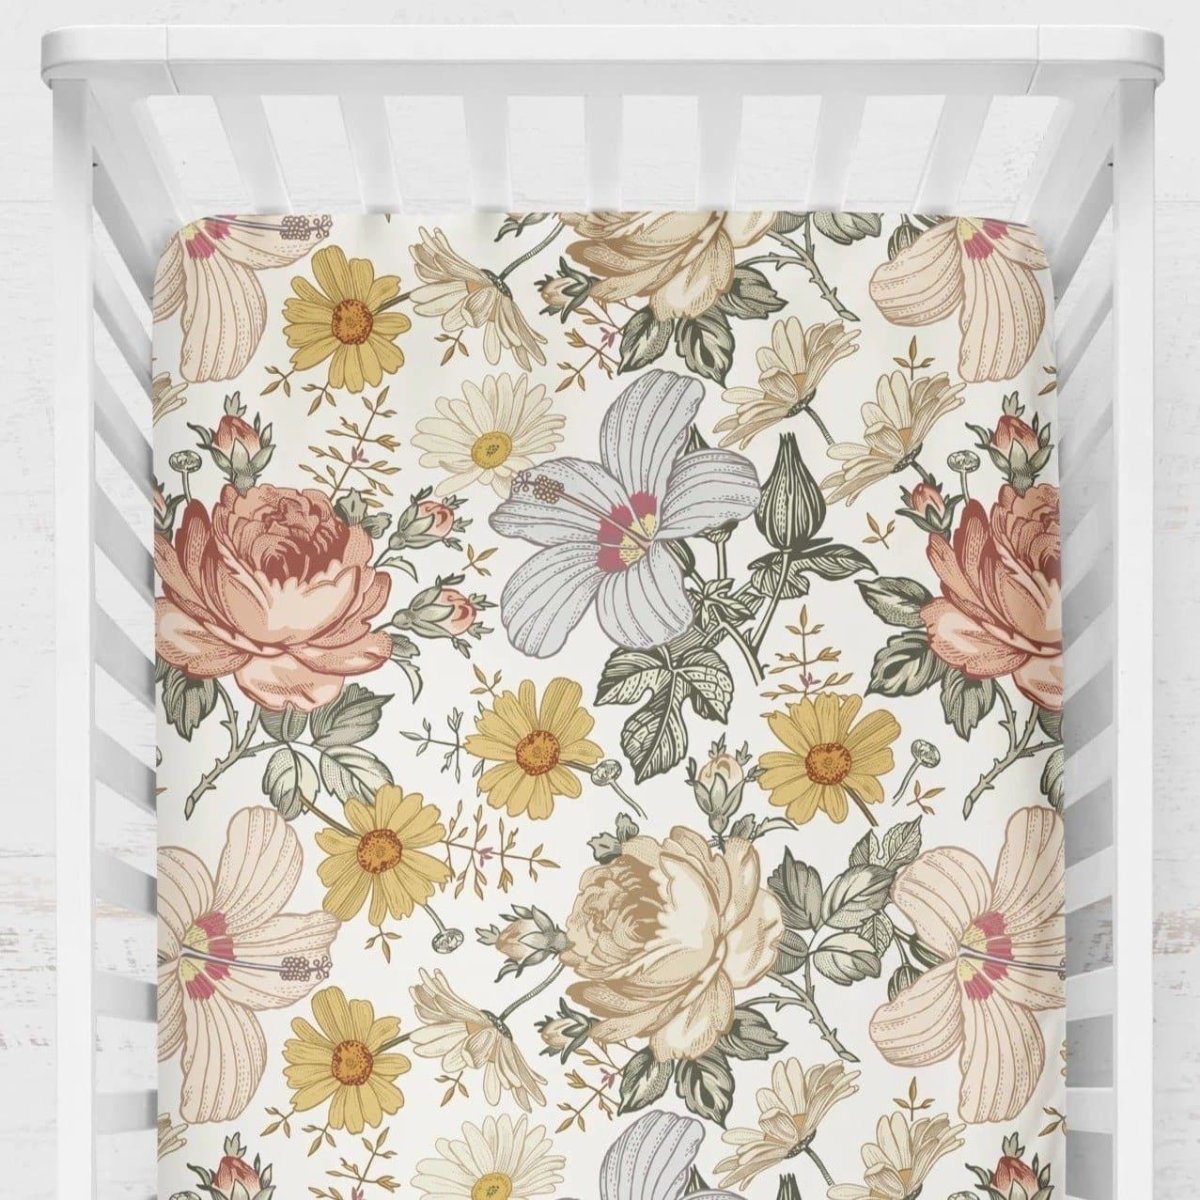 Vintage Earthy Floral Ruffled Crib Bedding - gender_girl, Theme_Floral, Vintage Earthy Floral